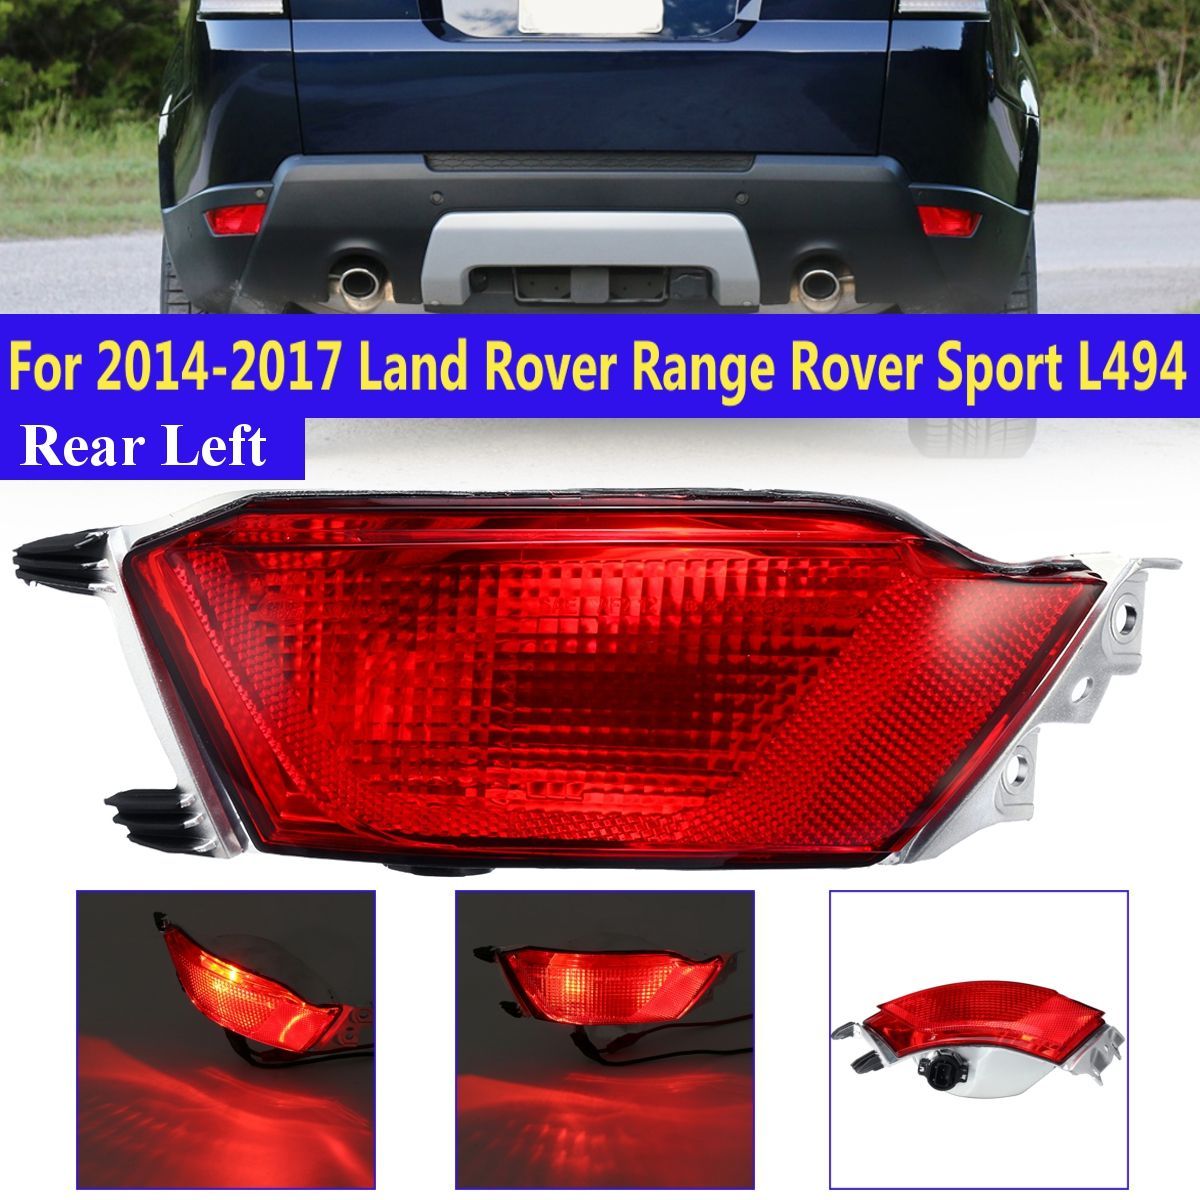 Rear-Bumper-Left-Fog-Lamp-Light-with-H11-Bulb-For-Land-Rover-Range-Rover-Sport-L494-2014-2017-1708547